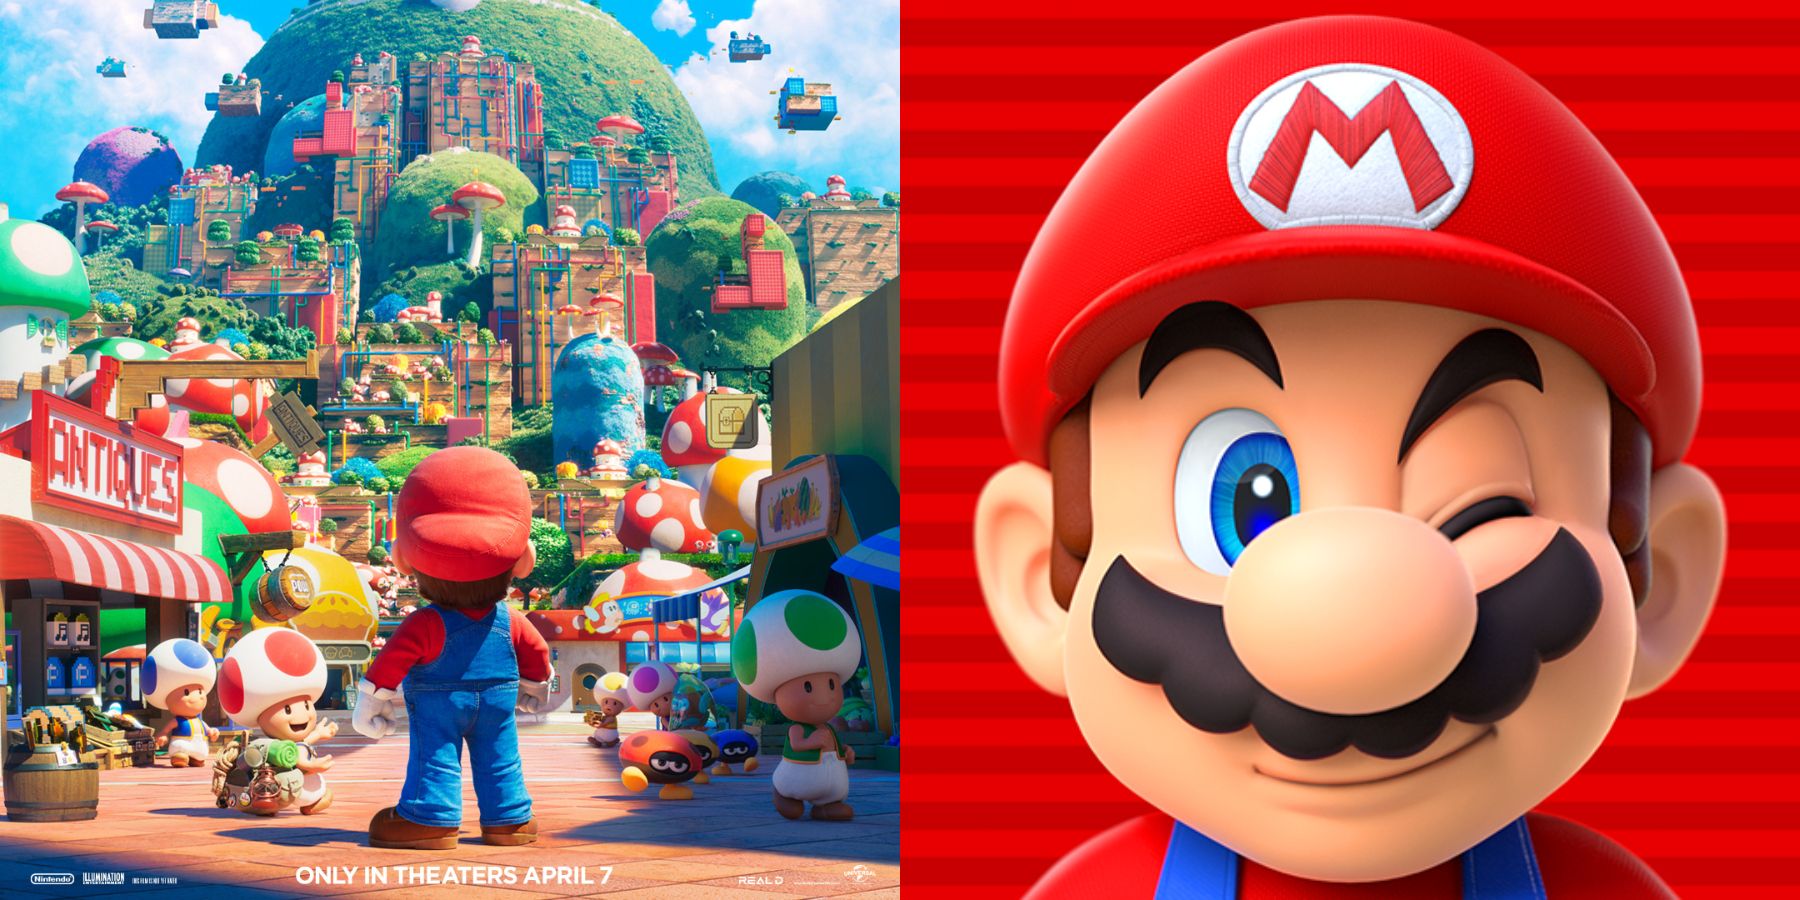 Analyzing The Super Mario Bros. Movie's Poster